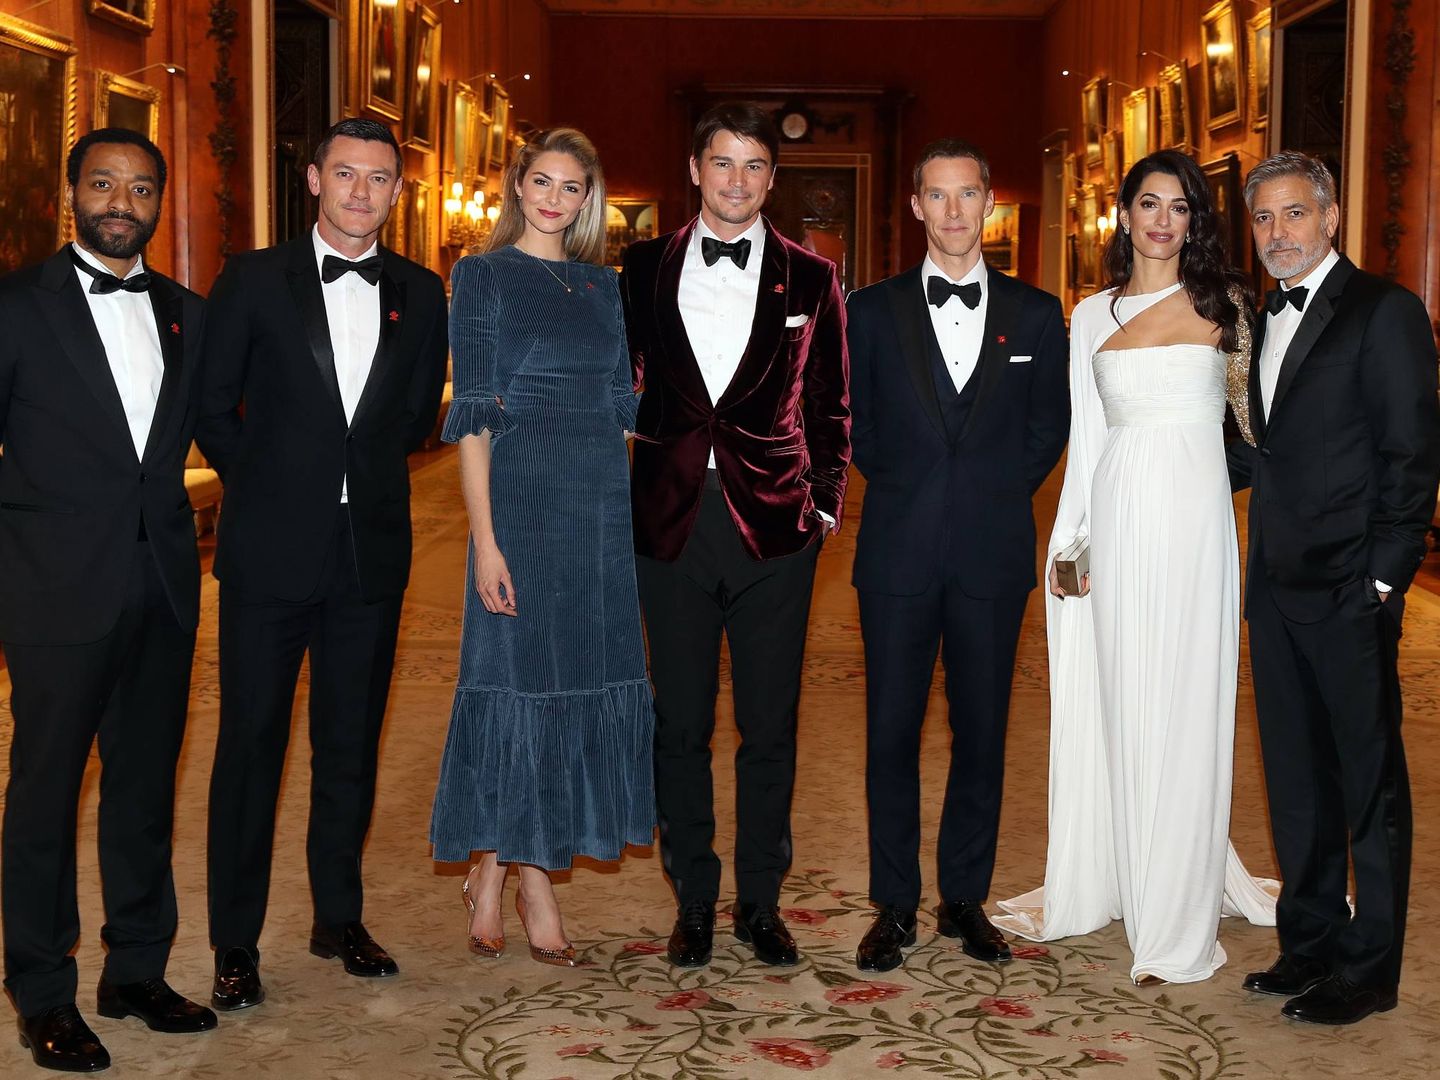 Invitados a la cena benéfica de The Prince's Trust en Buckingham Palace. De izquierda a derecha: Chiwetel Ejiofor, Luke Evans, Tamsin Egerton, Josh Hartnett, Benedict Cumberbatch, Amal Clooney y George Clooney. (Getty)